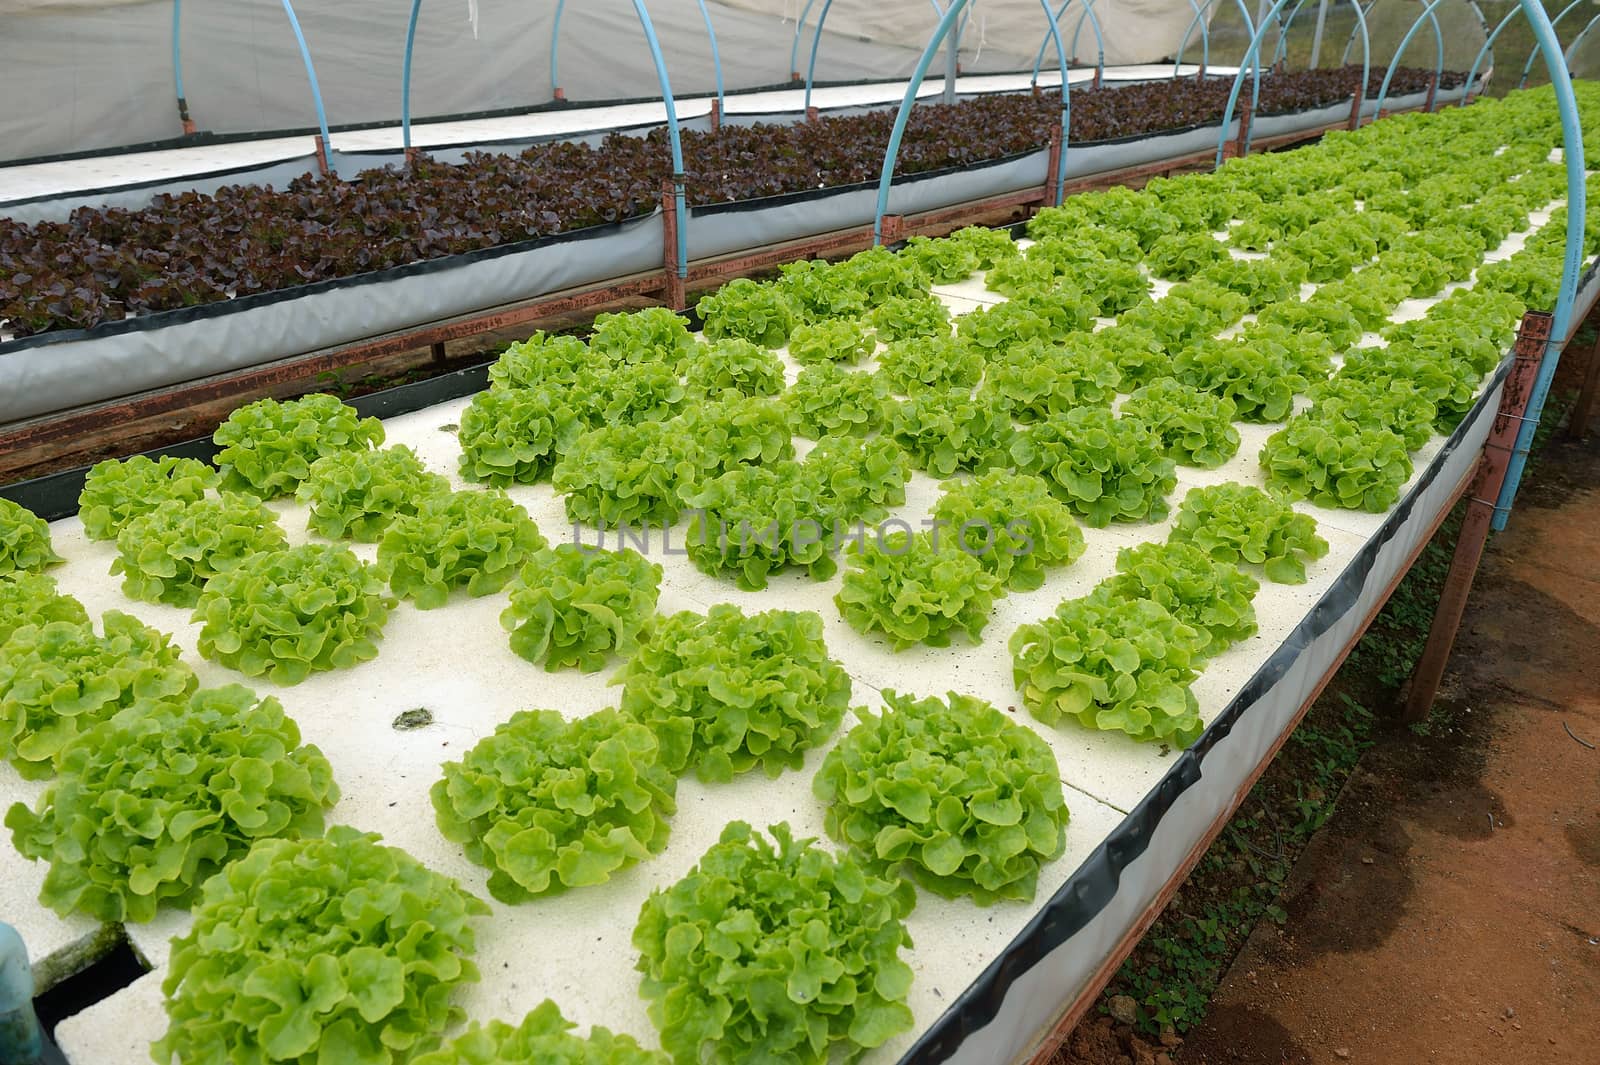 hydroponic farm at Doi Angkhang royal project, Chiangmai, Thailand.